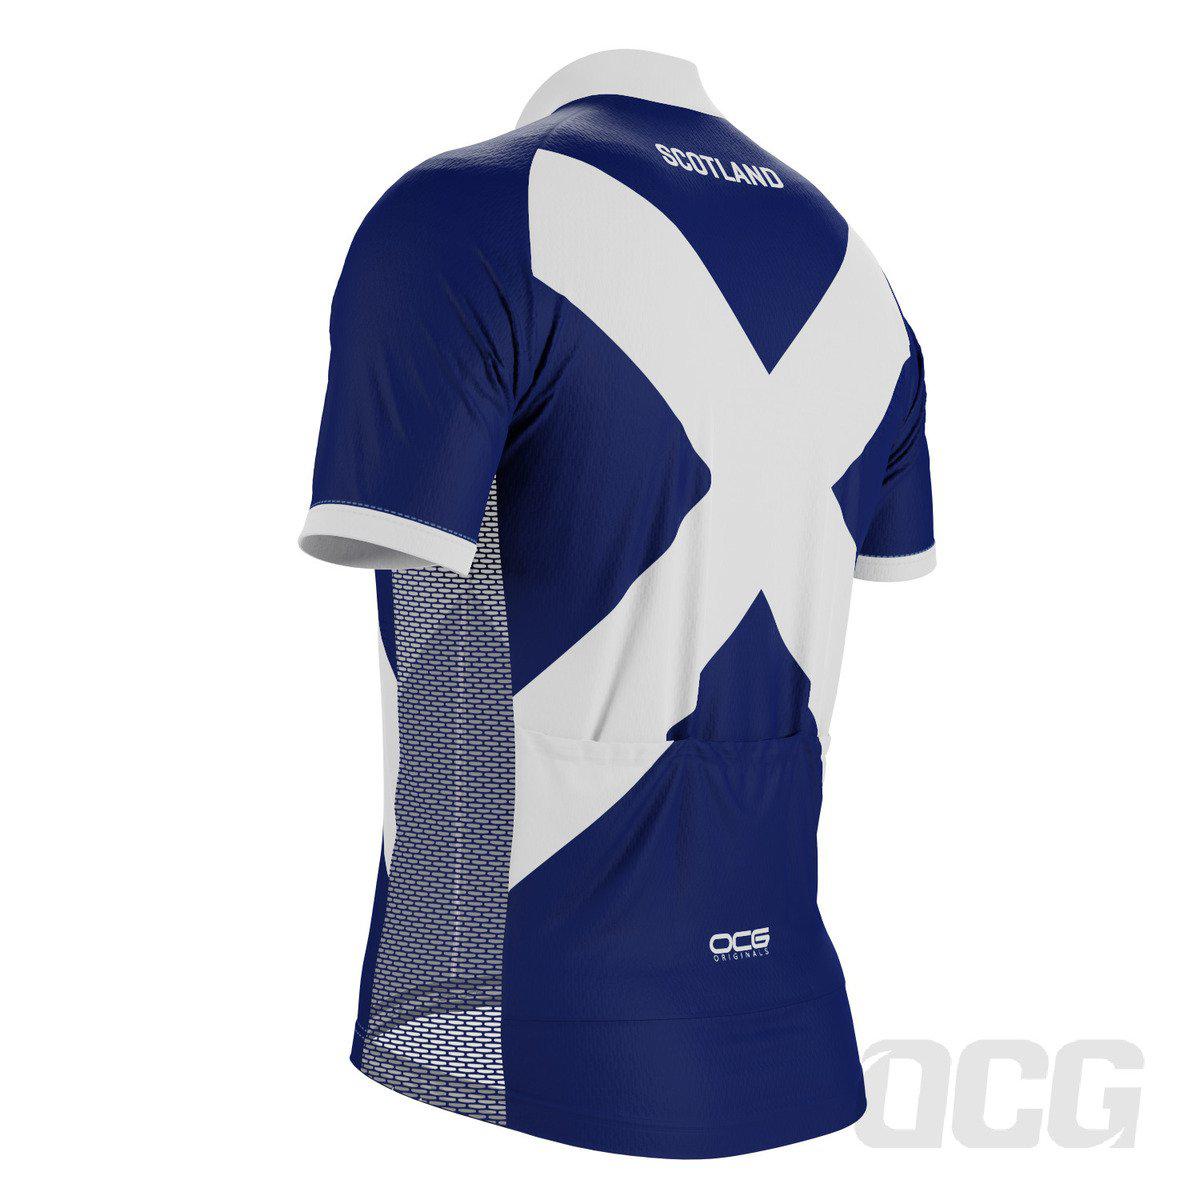 Men's Scotland Flag National Short Sleeve Cycling Jersey